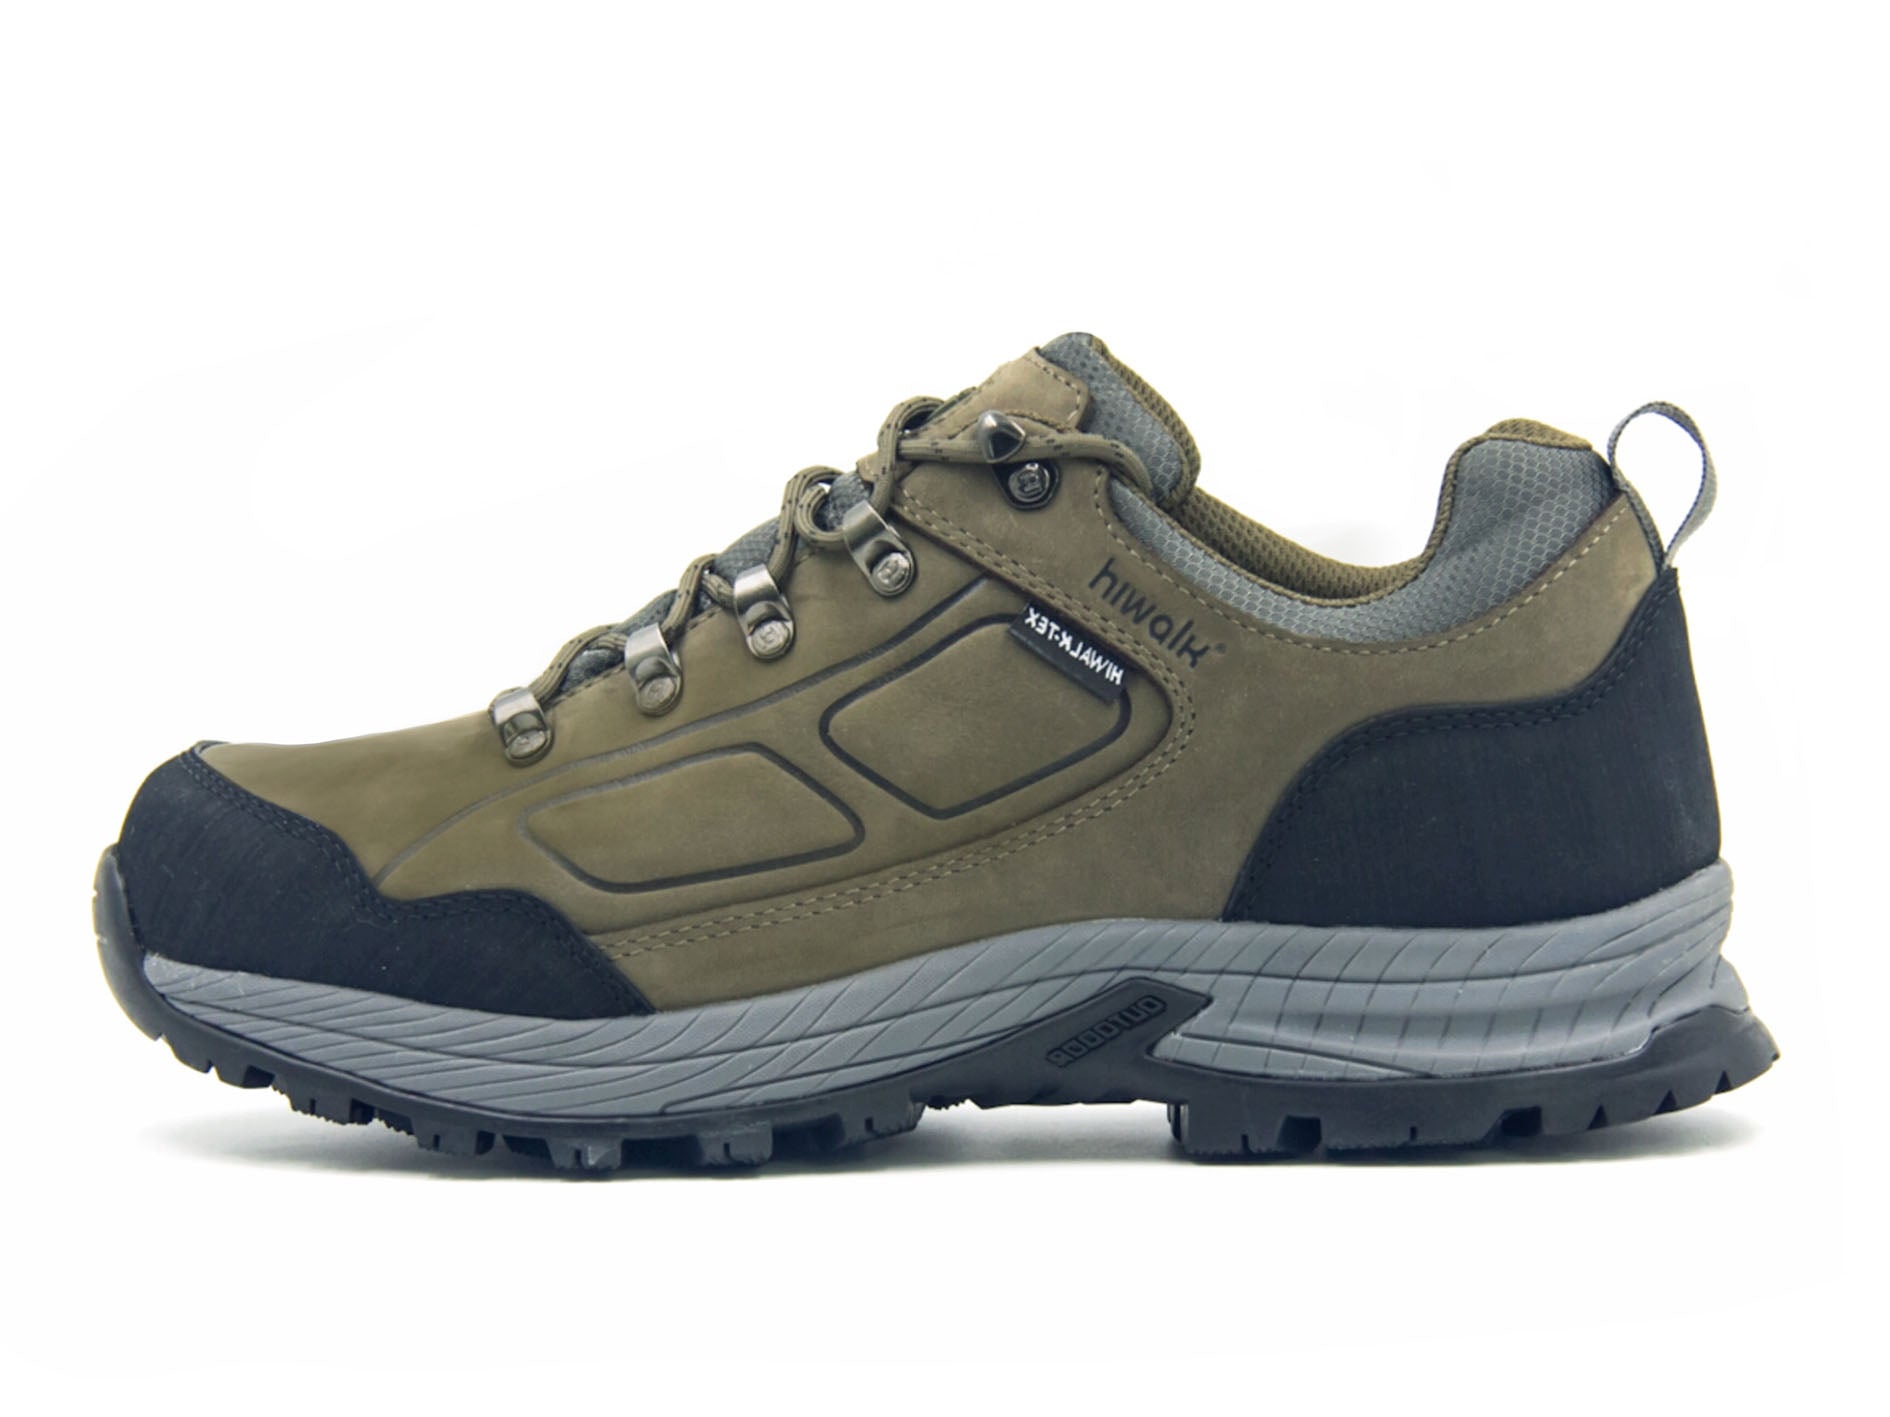 Men's Rockwild Hiking Shoe